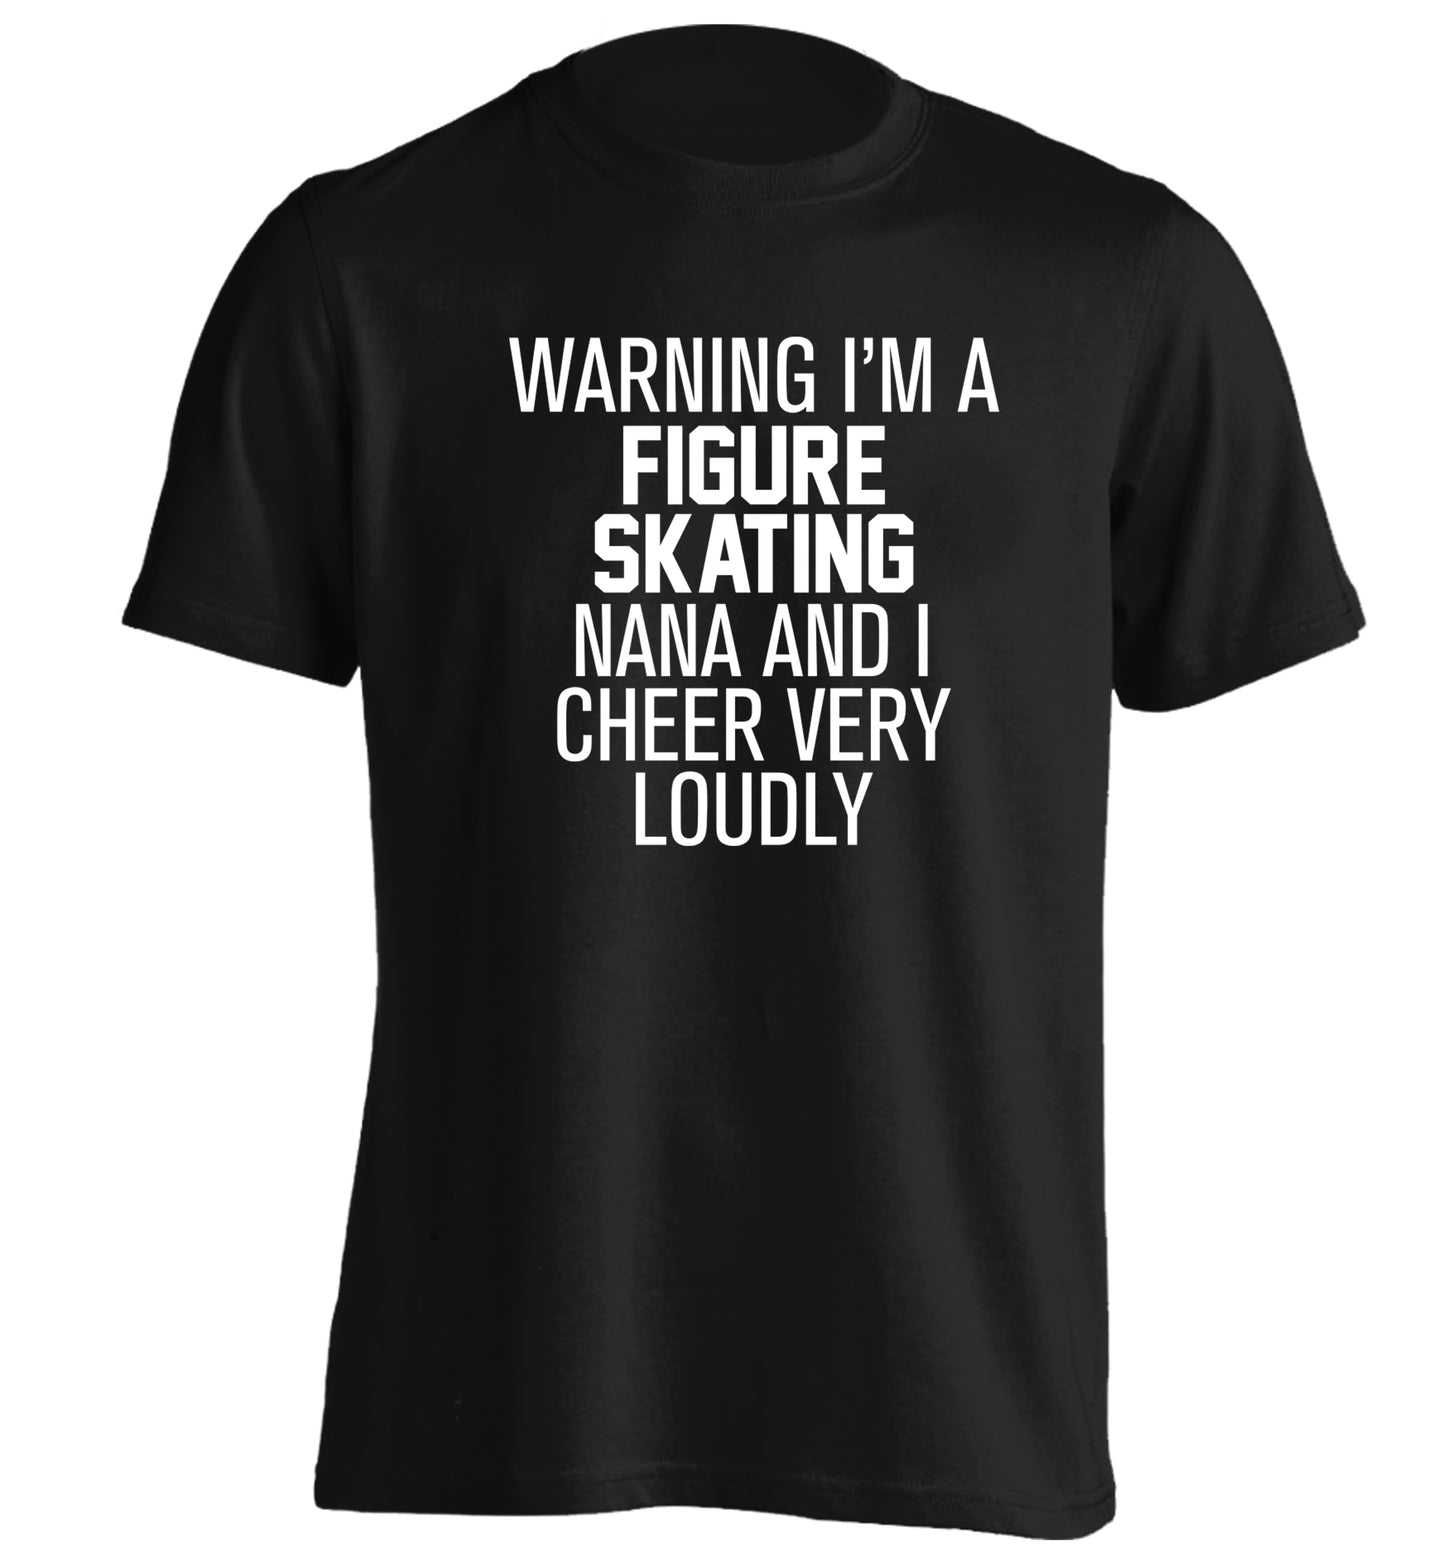 Warning I'm a figure skating nana and I cheer very loudly adults unisexblack Tshirt 2XL